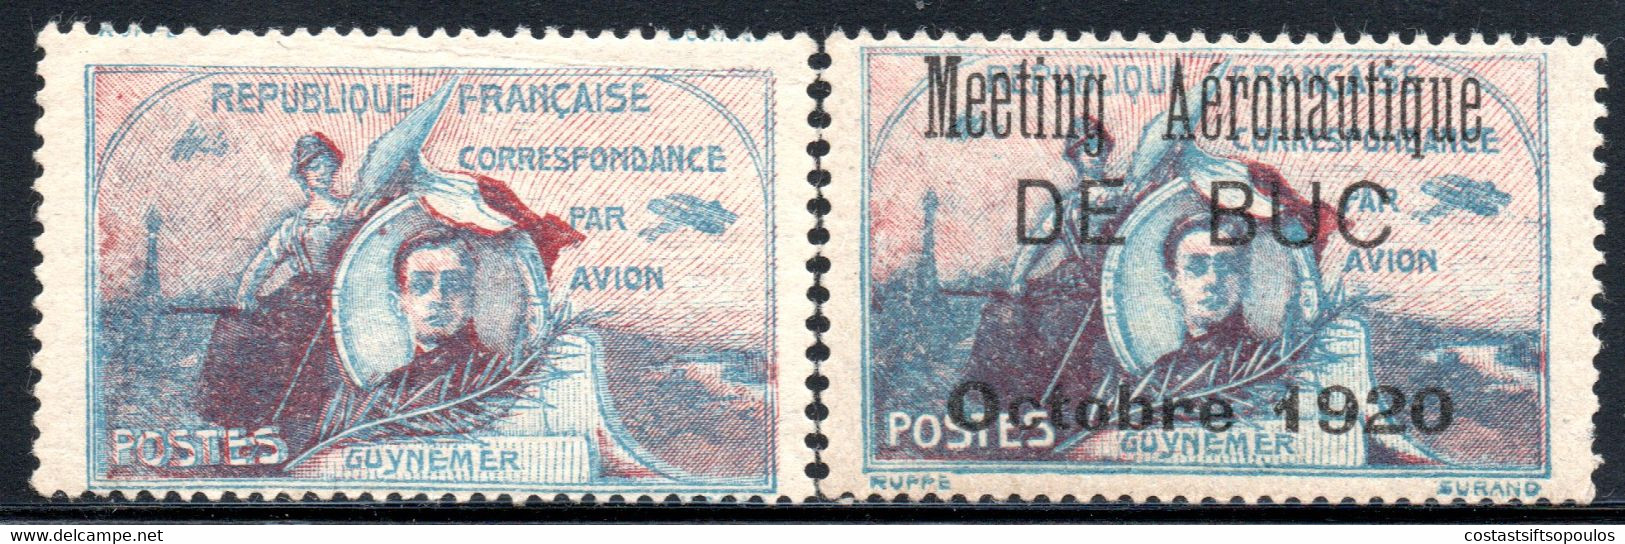 193.FRANCE.1920  GUYNEMER AND DE BUC AVIATION MEETING LABELS MNH - Aviación